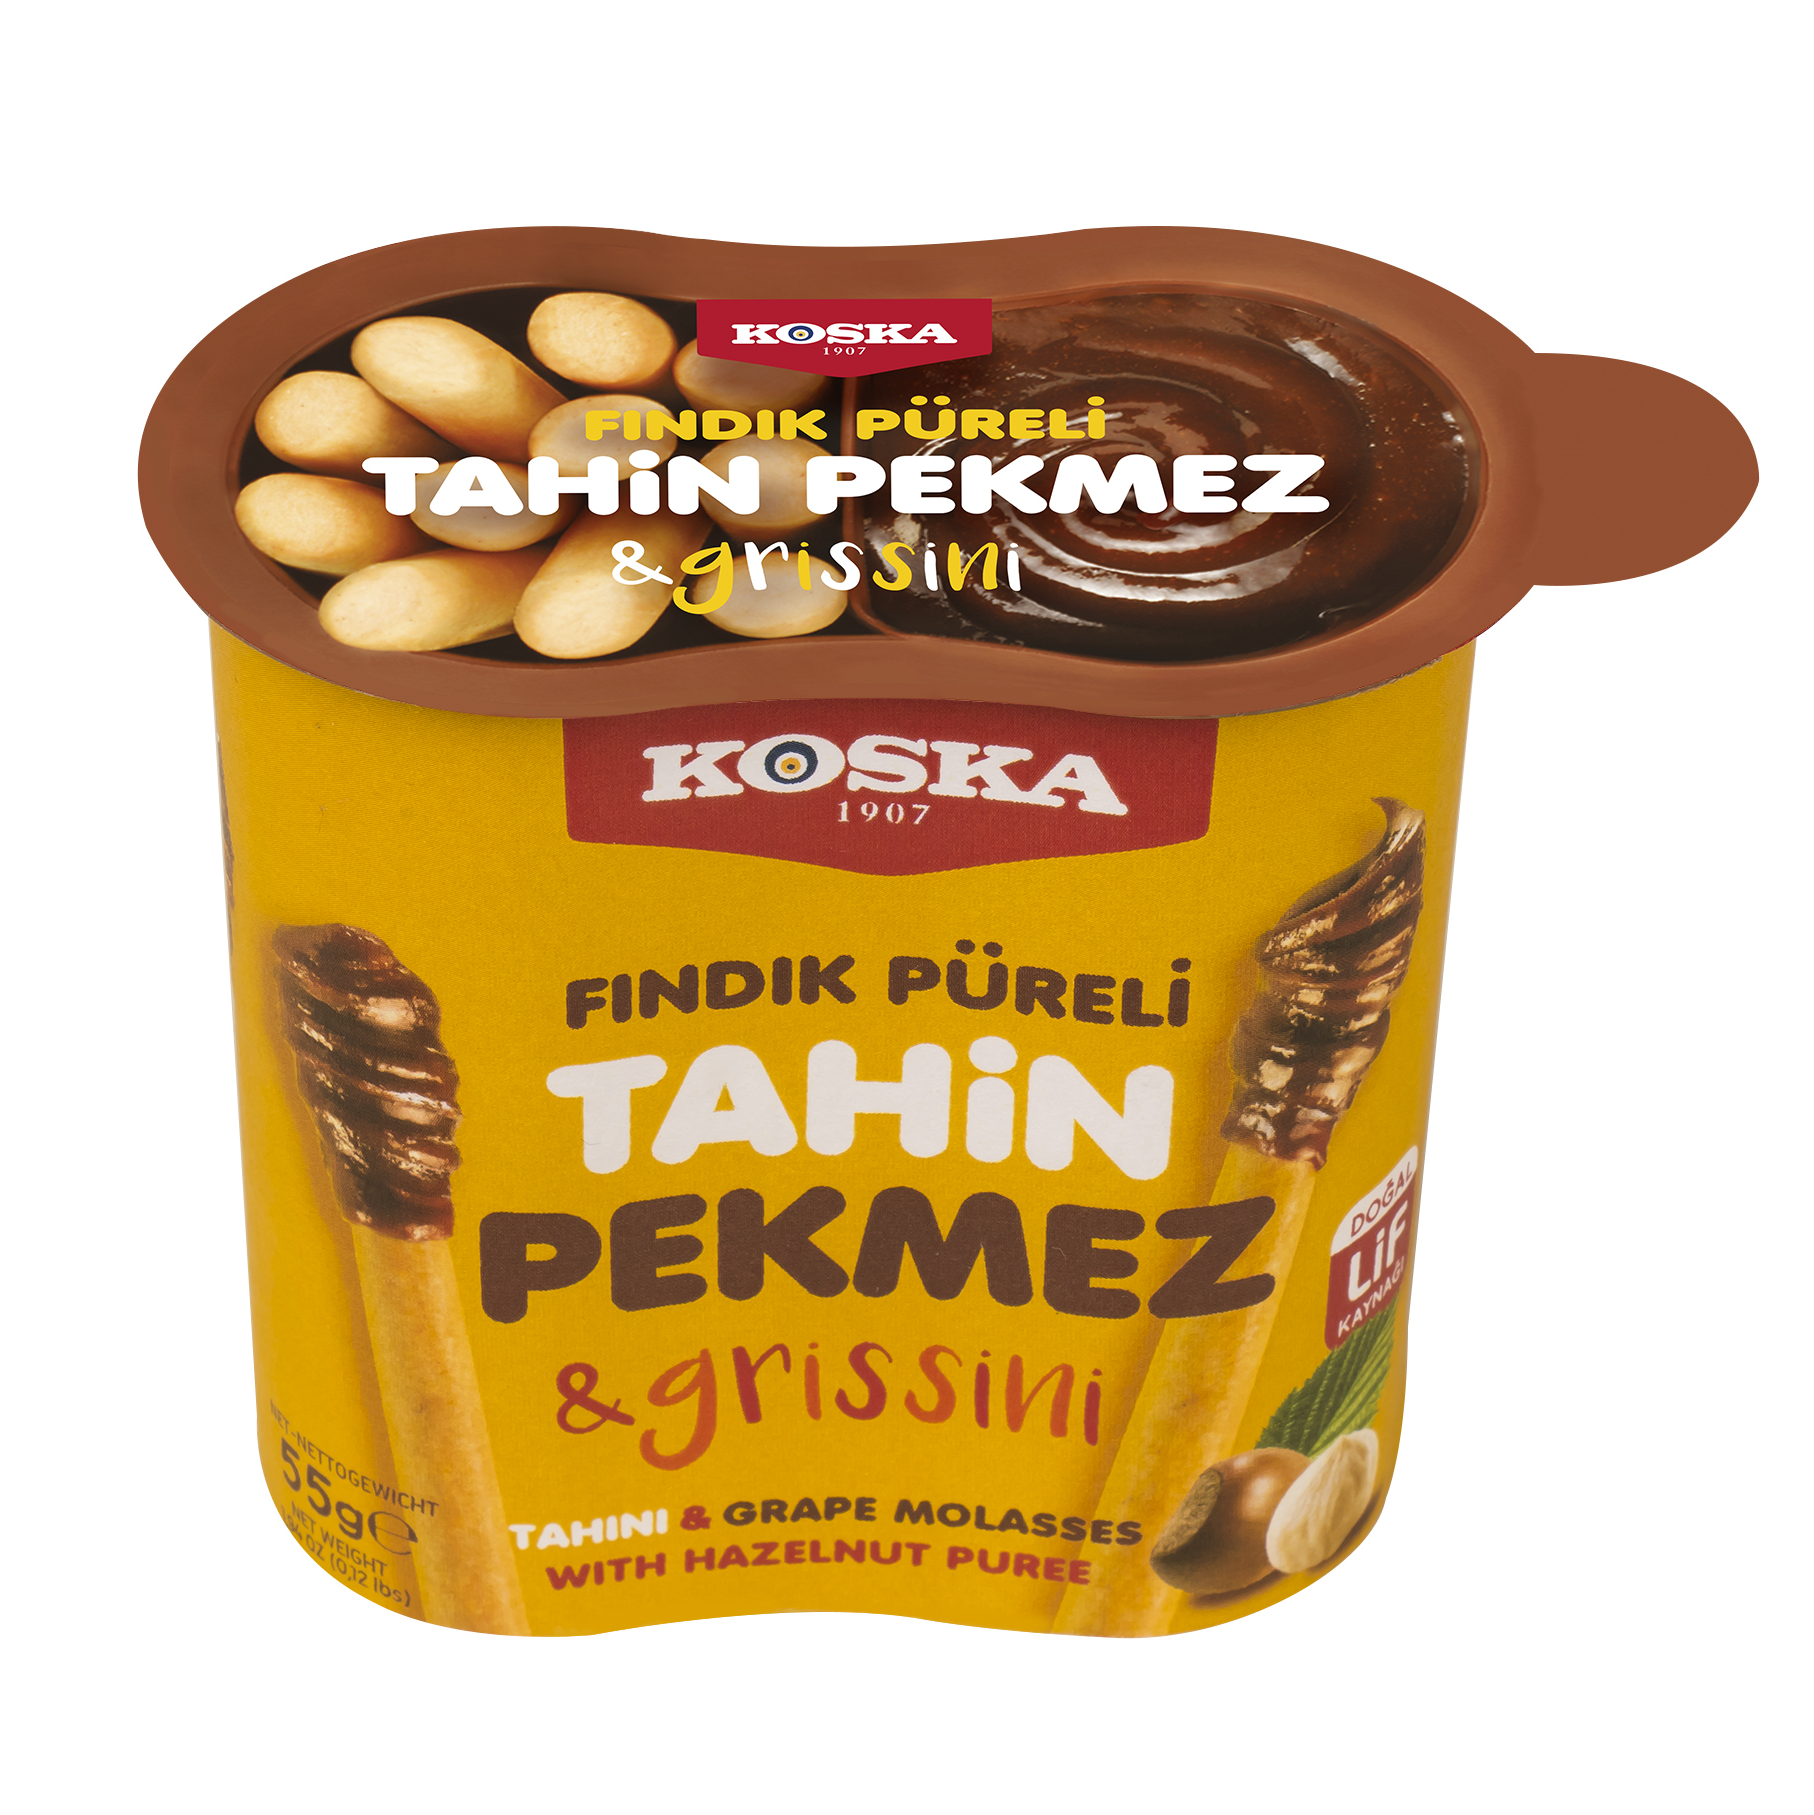 Tahini & Molasses “Tahin Pekmez” – Turkish Dessert / Spread – This